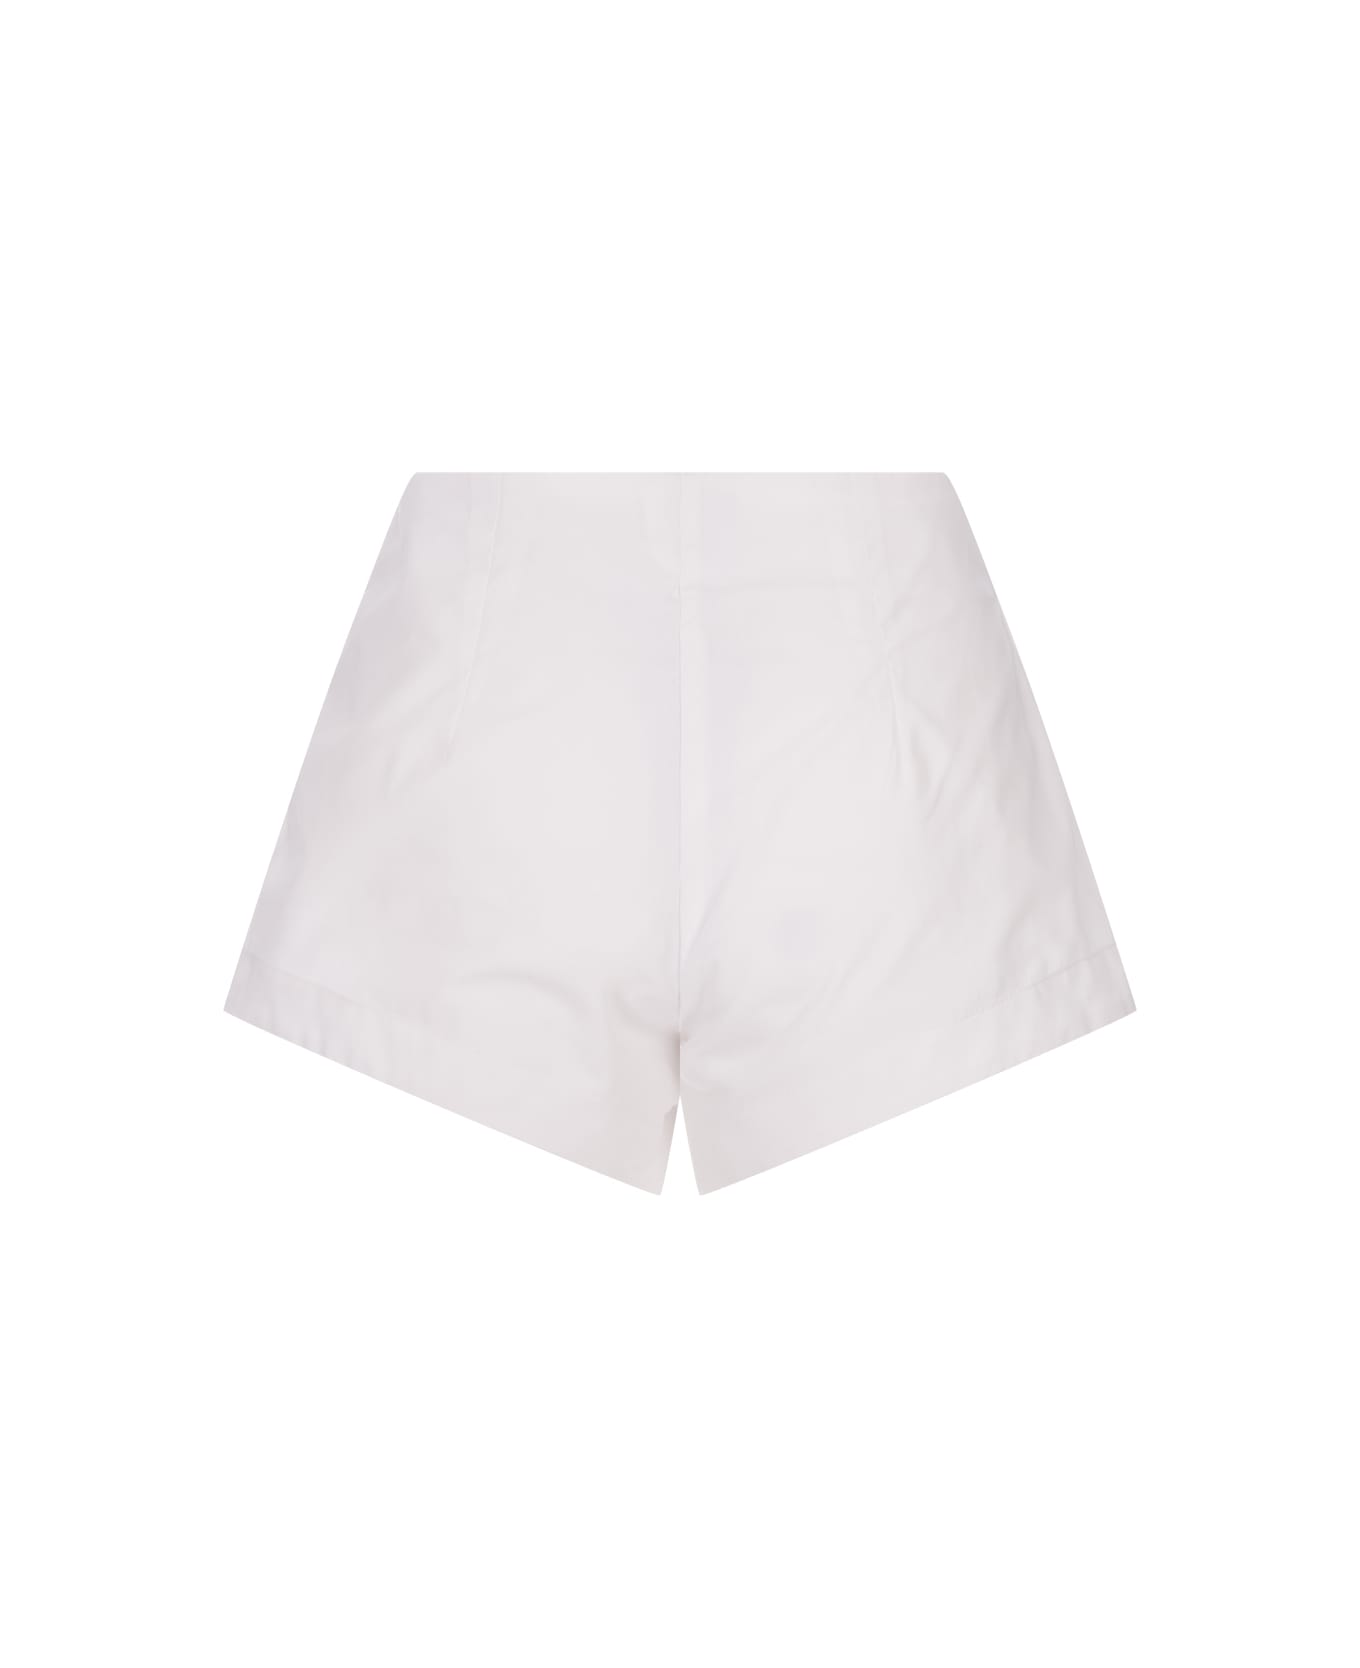 Amotea White Cotton Donna Shorts - White